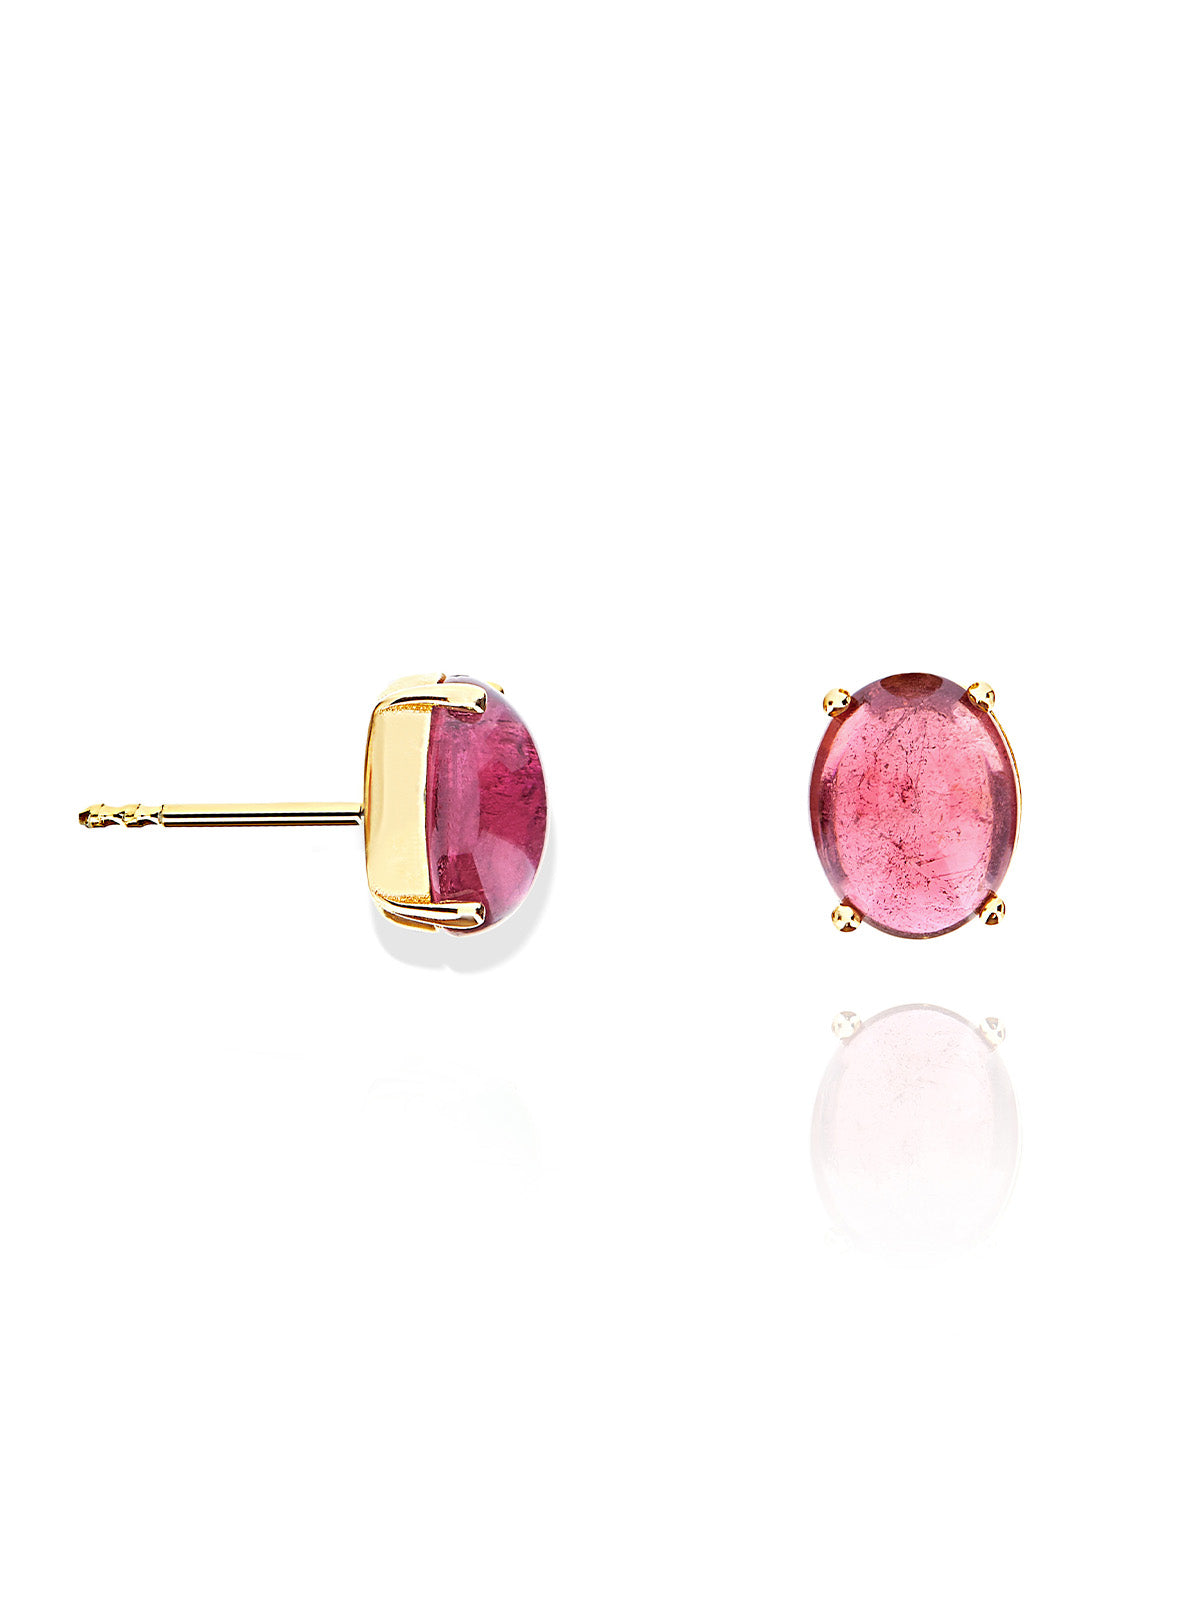 "torumalines" gold and pink tourmaline stud earrings (large)